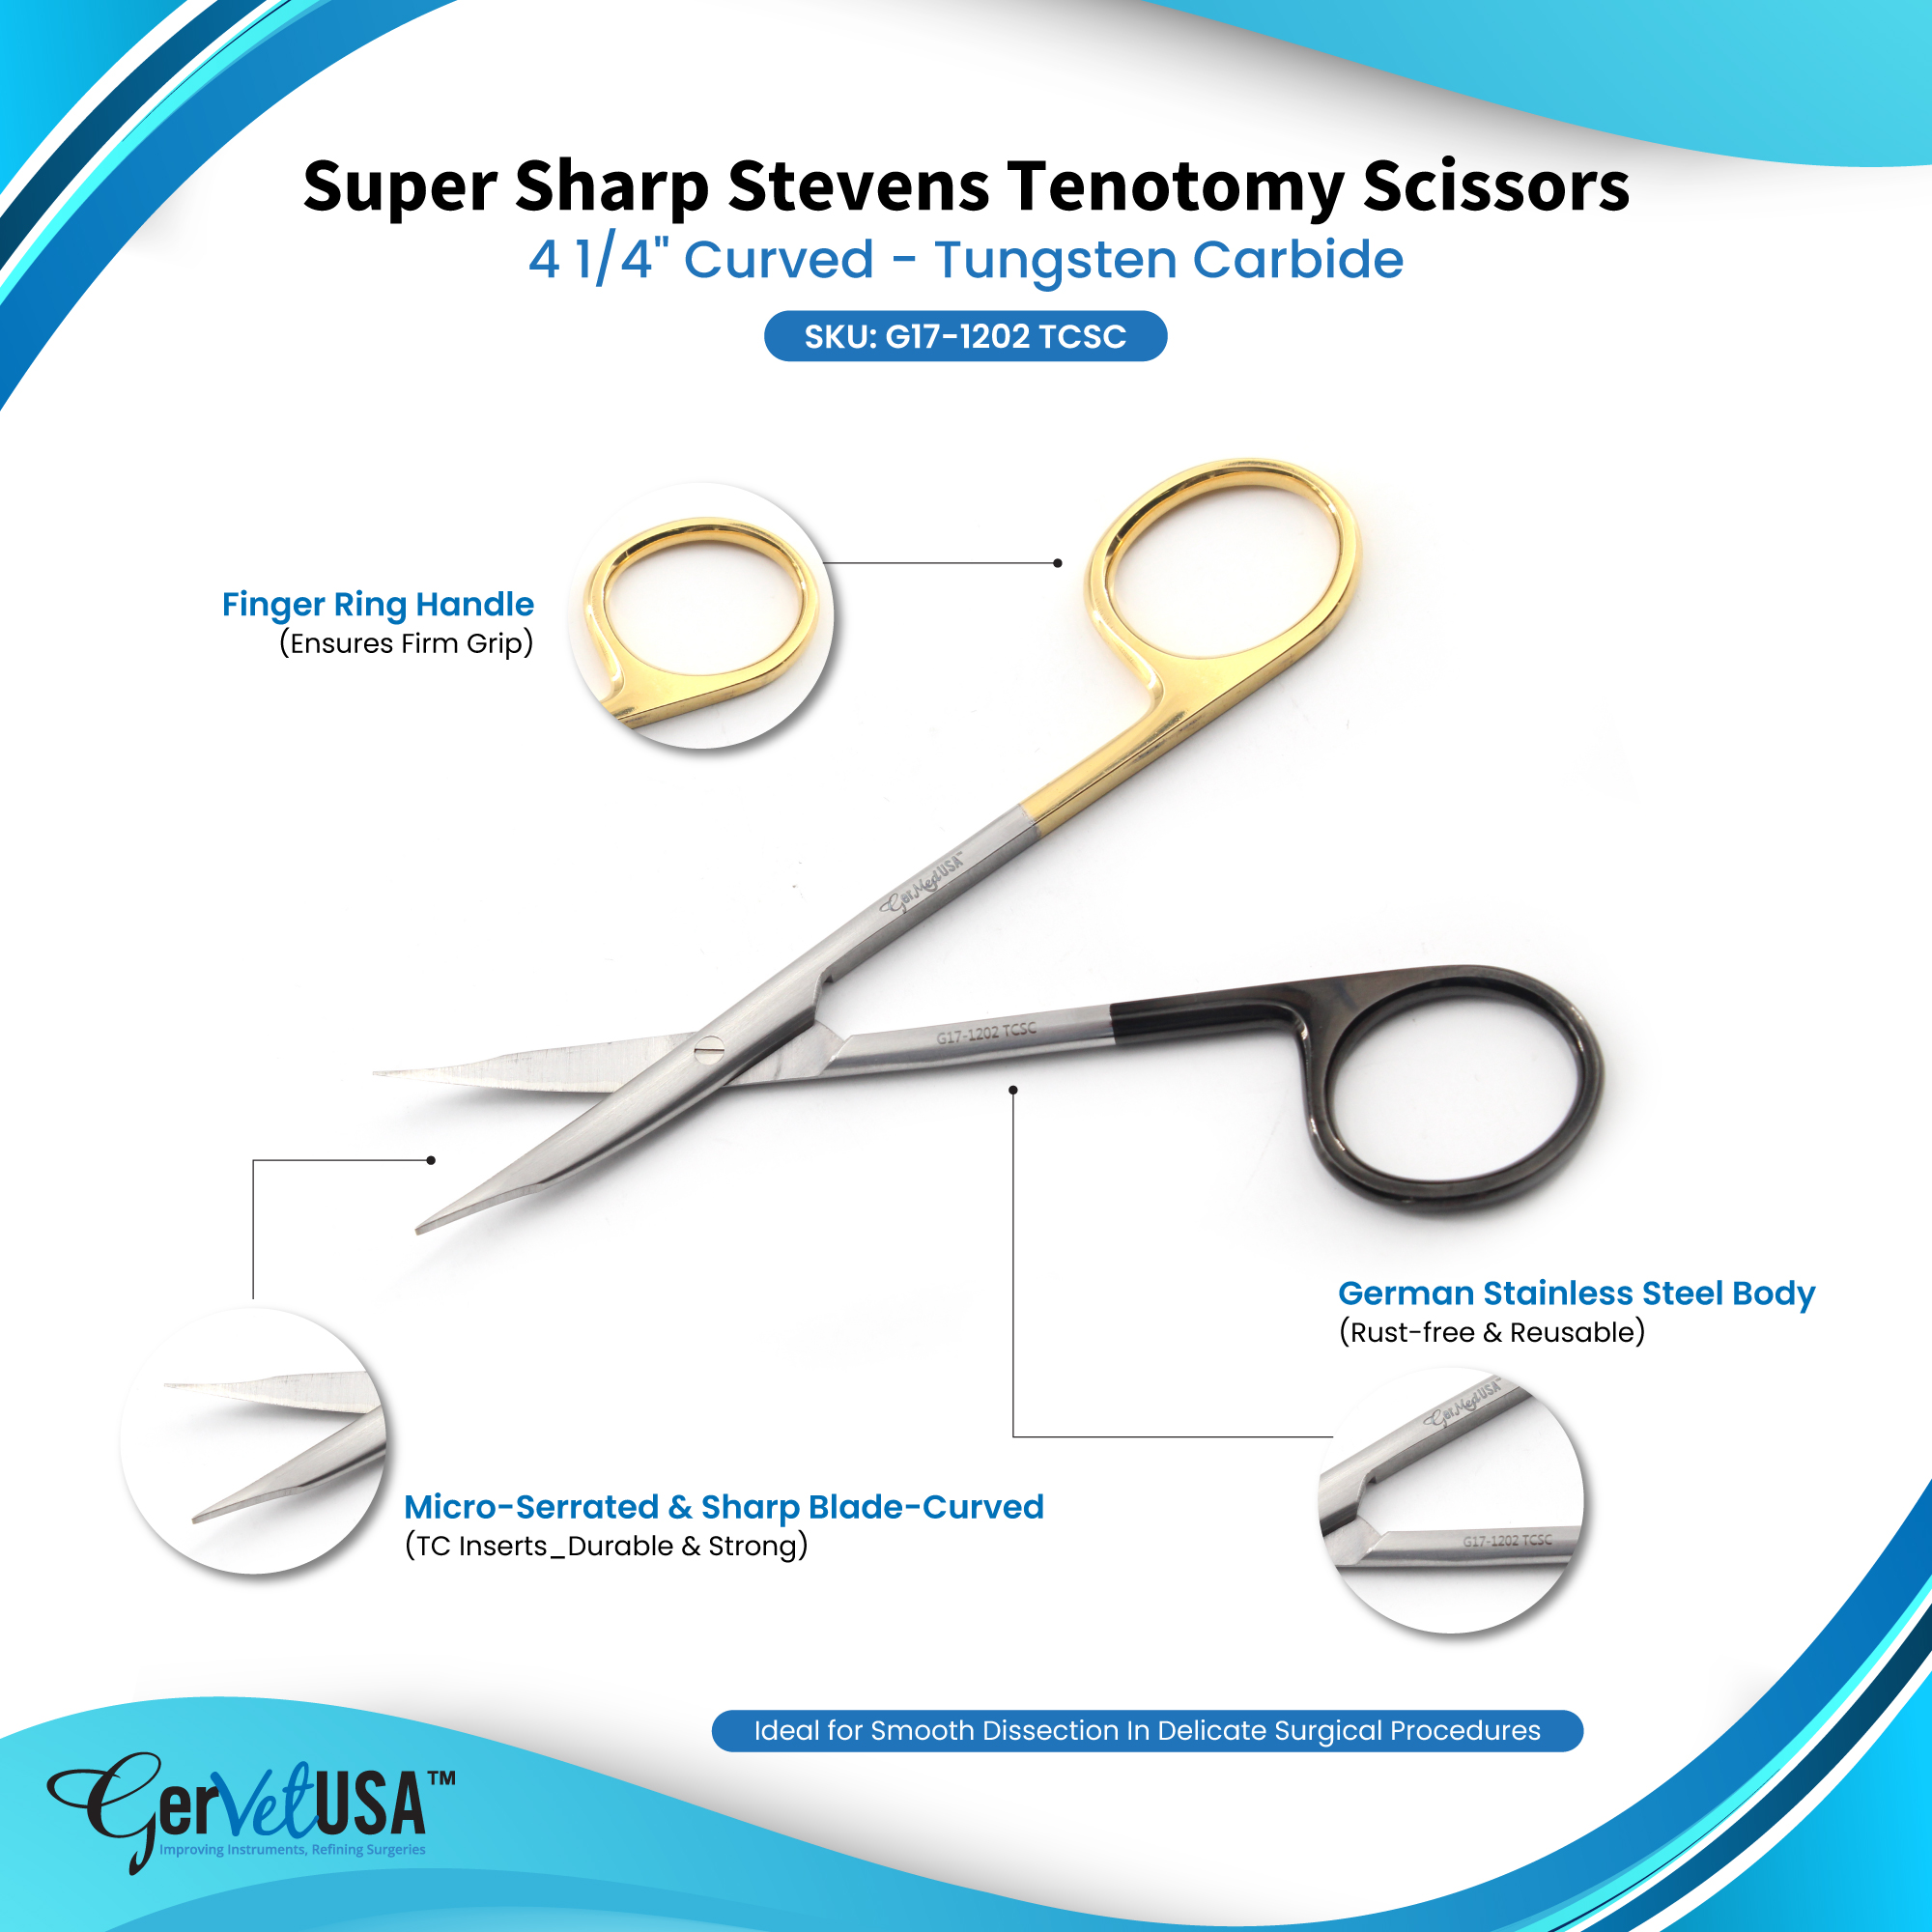 https://www.gervetusa.com/up_data/products/images/ss-stevens-tenotomy-scissors-tungsten-carbide-super-sharp-stevens-tenotomy-scissors-tungsten-carbide-1666006674-.jpg